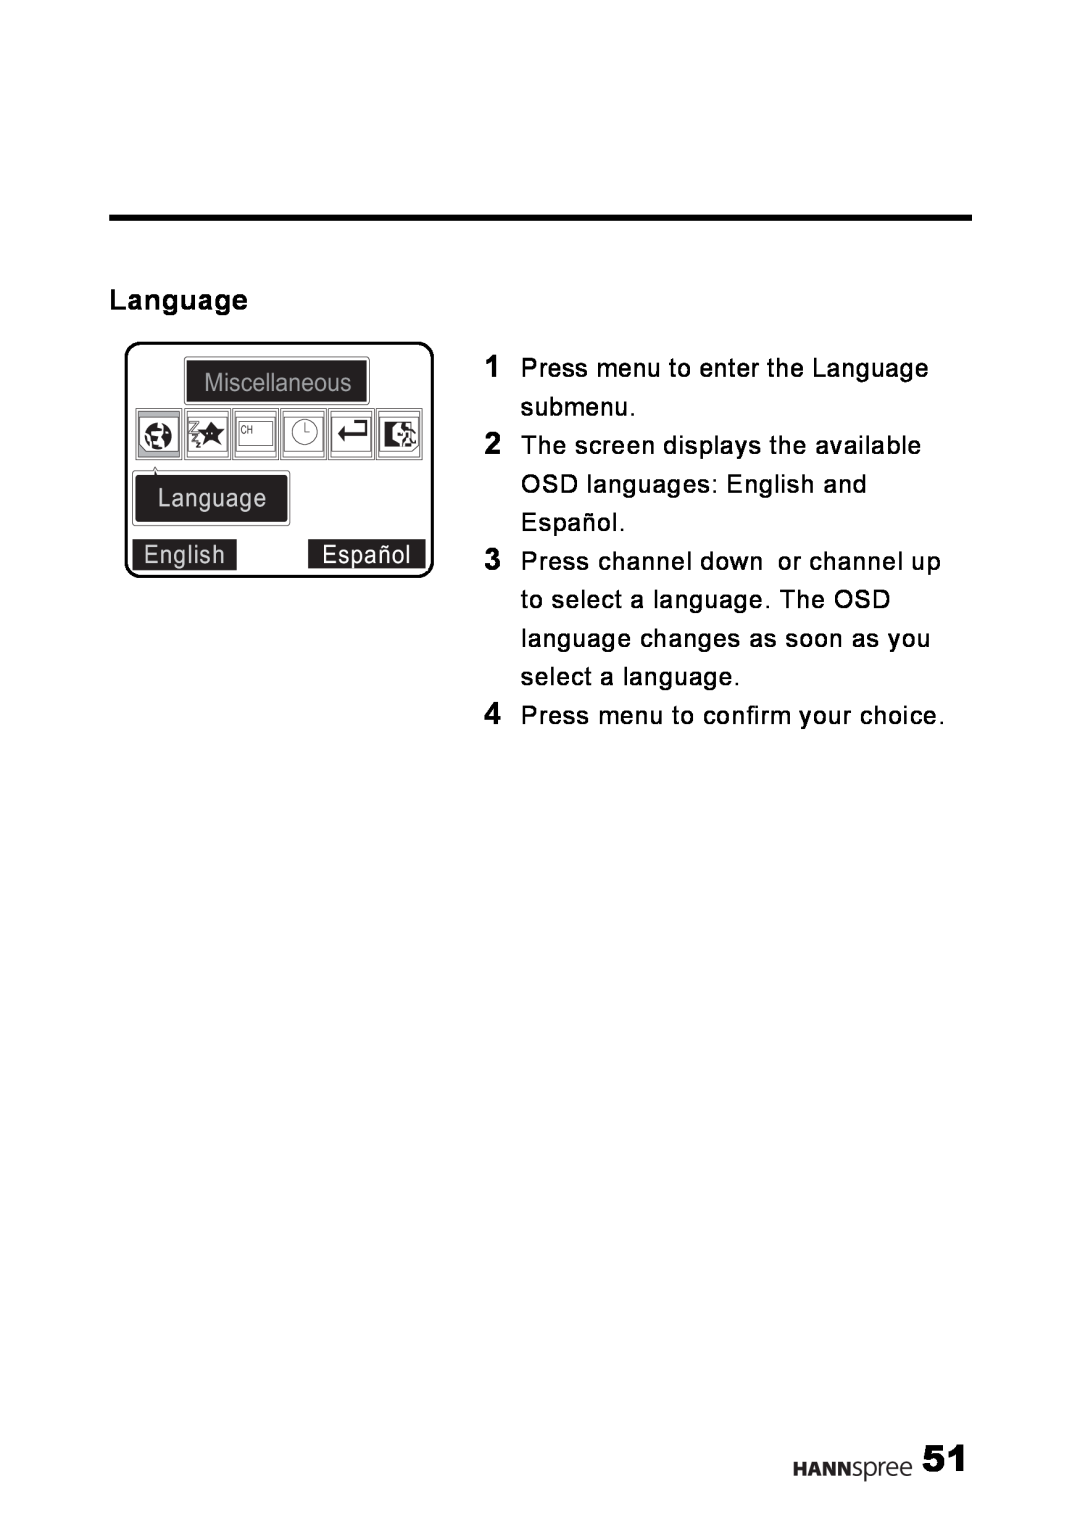 HANNspree LT09-10U1-000 user manual Miscellaneous, Language English Español, Press menu to enter the Language submenu 